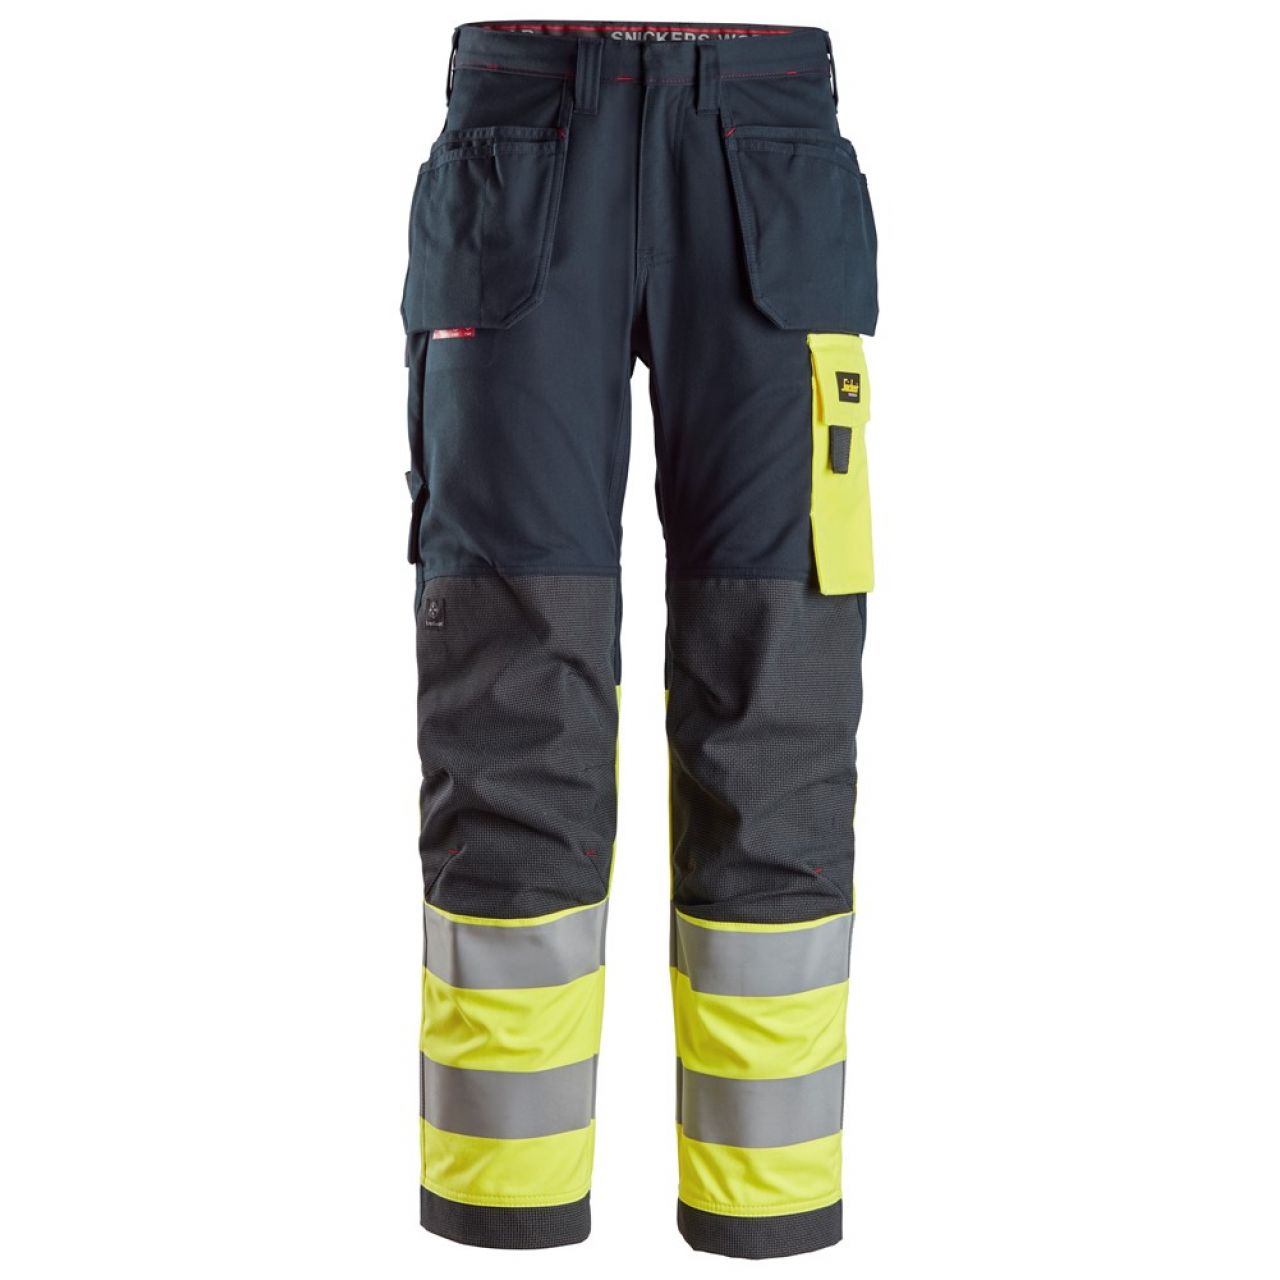 6276 Pantalones largos de trabajo de alta visibilidad clase 1 con bolsillos flotantes ProtecWork azul marino-amarillo talla 60